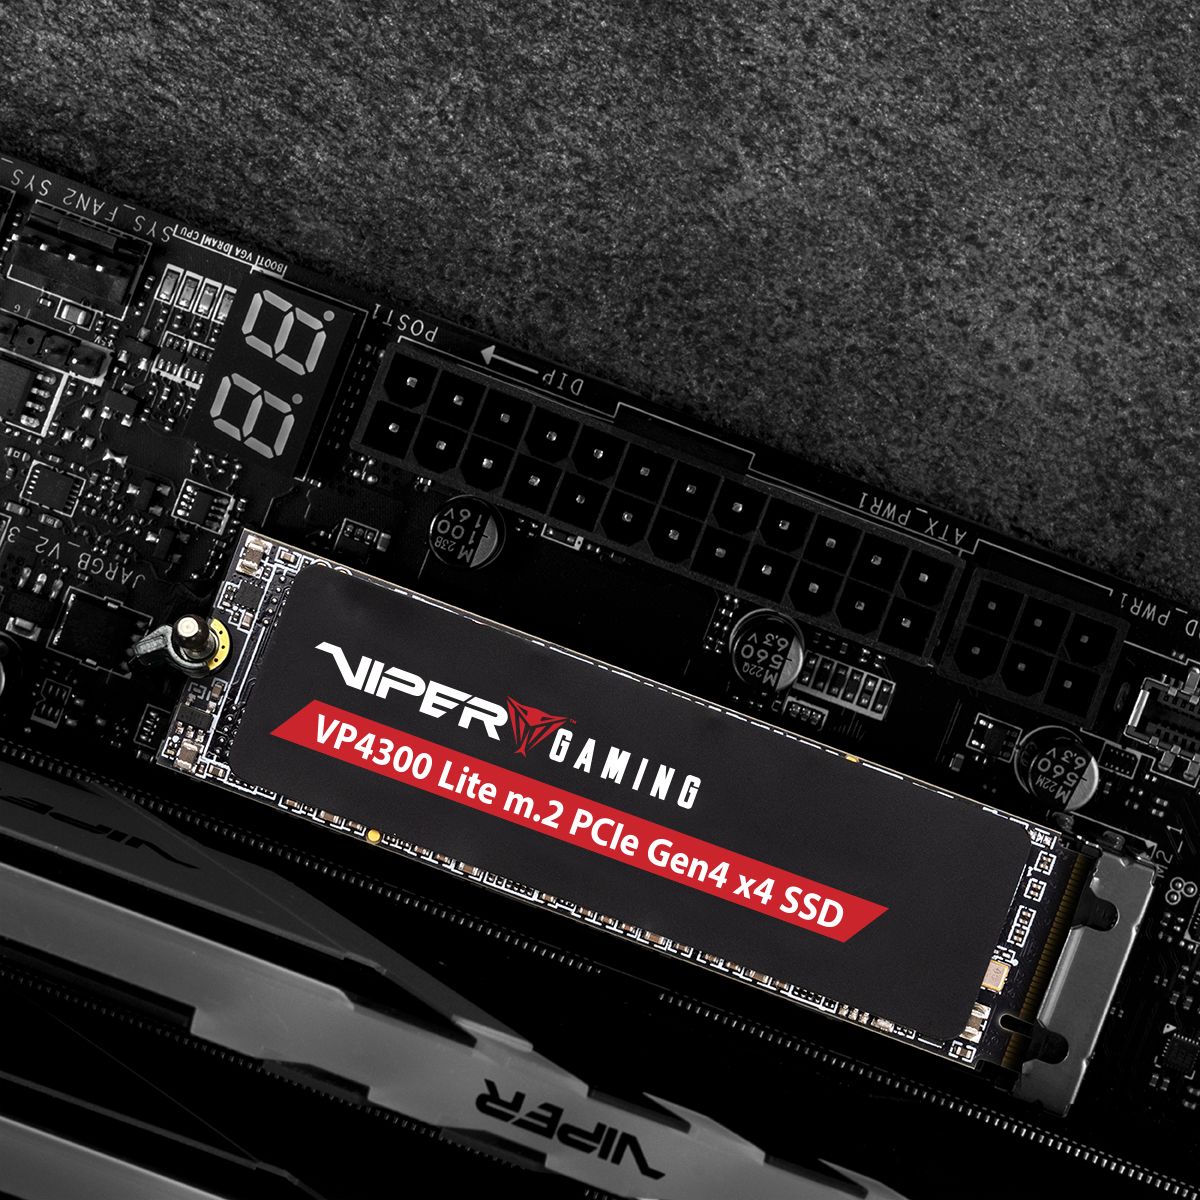 Patriot Viper VP4300 Lite Series - M.2 2280 PCIe Gen4 x4 Solid State Drive